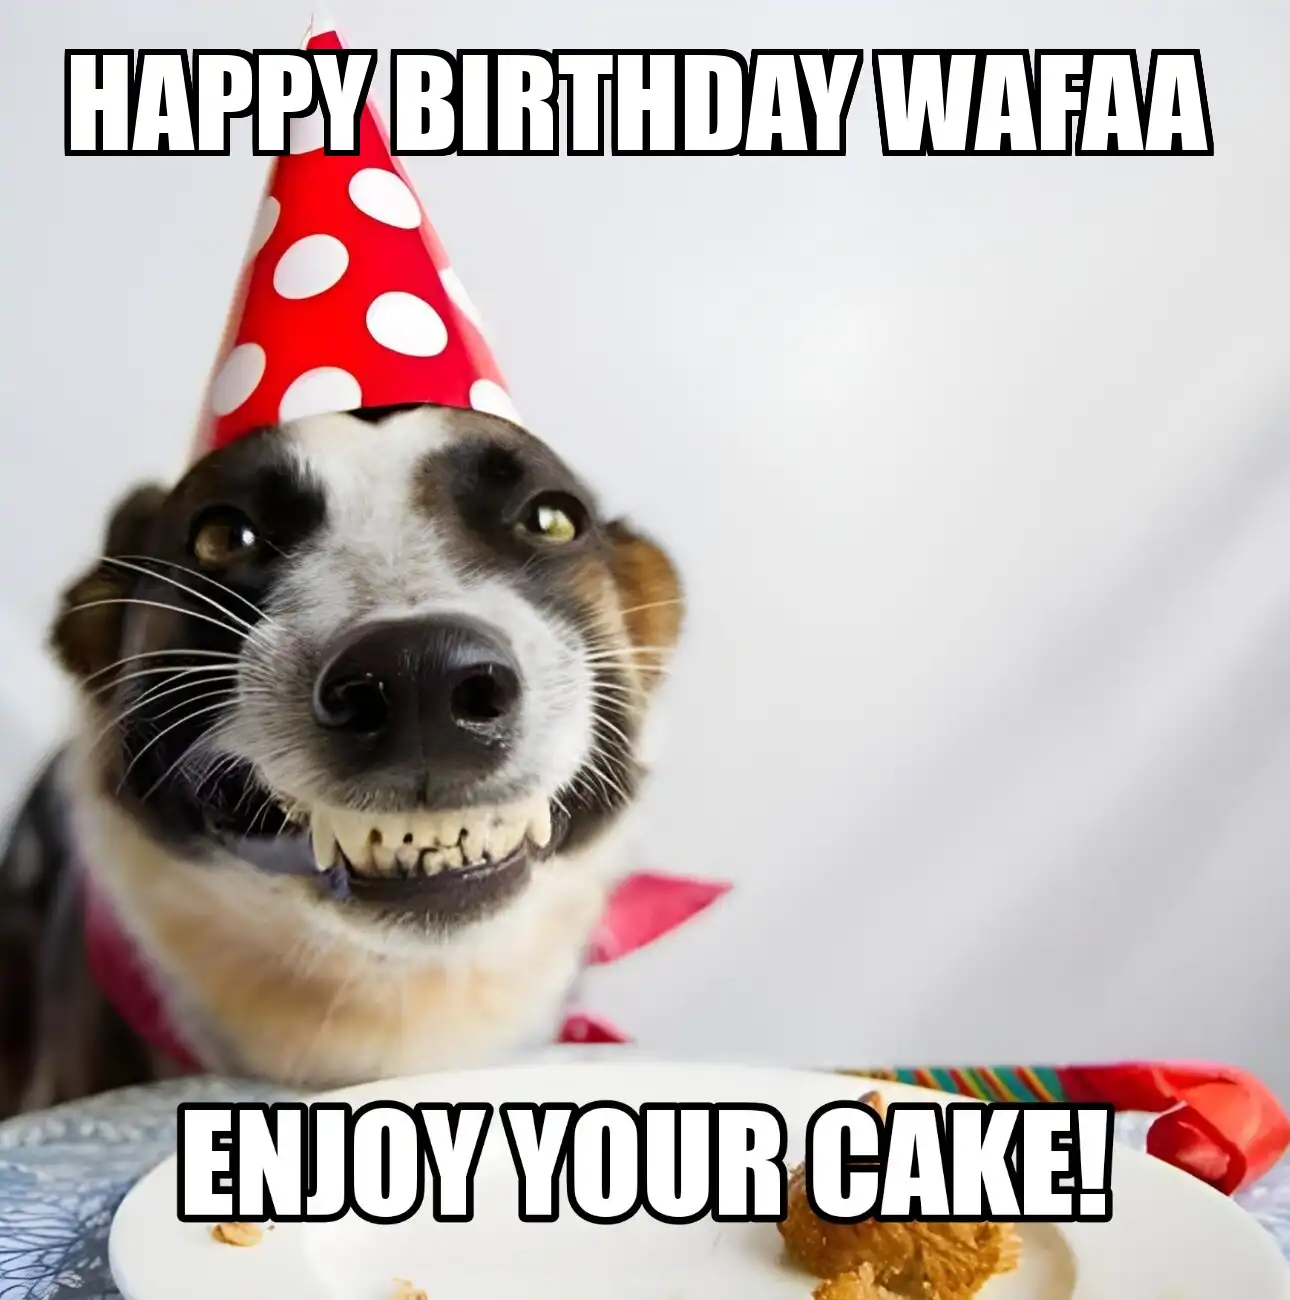 Happy Birthday Wafaa Enjoy Your Cake Dog Meme